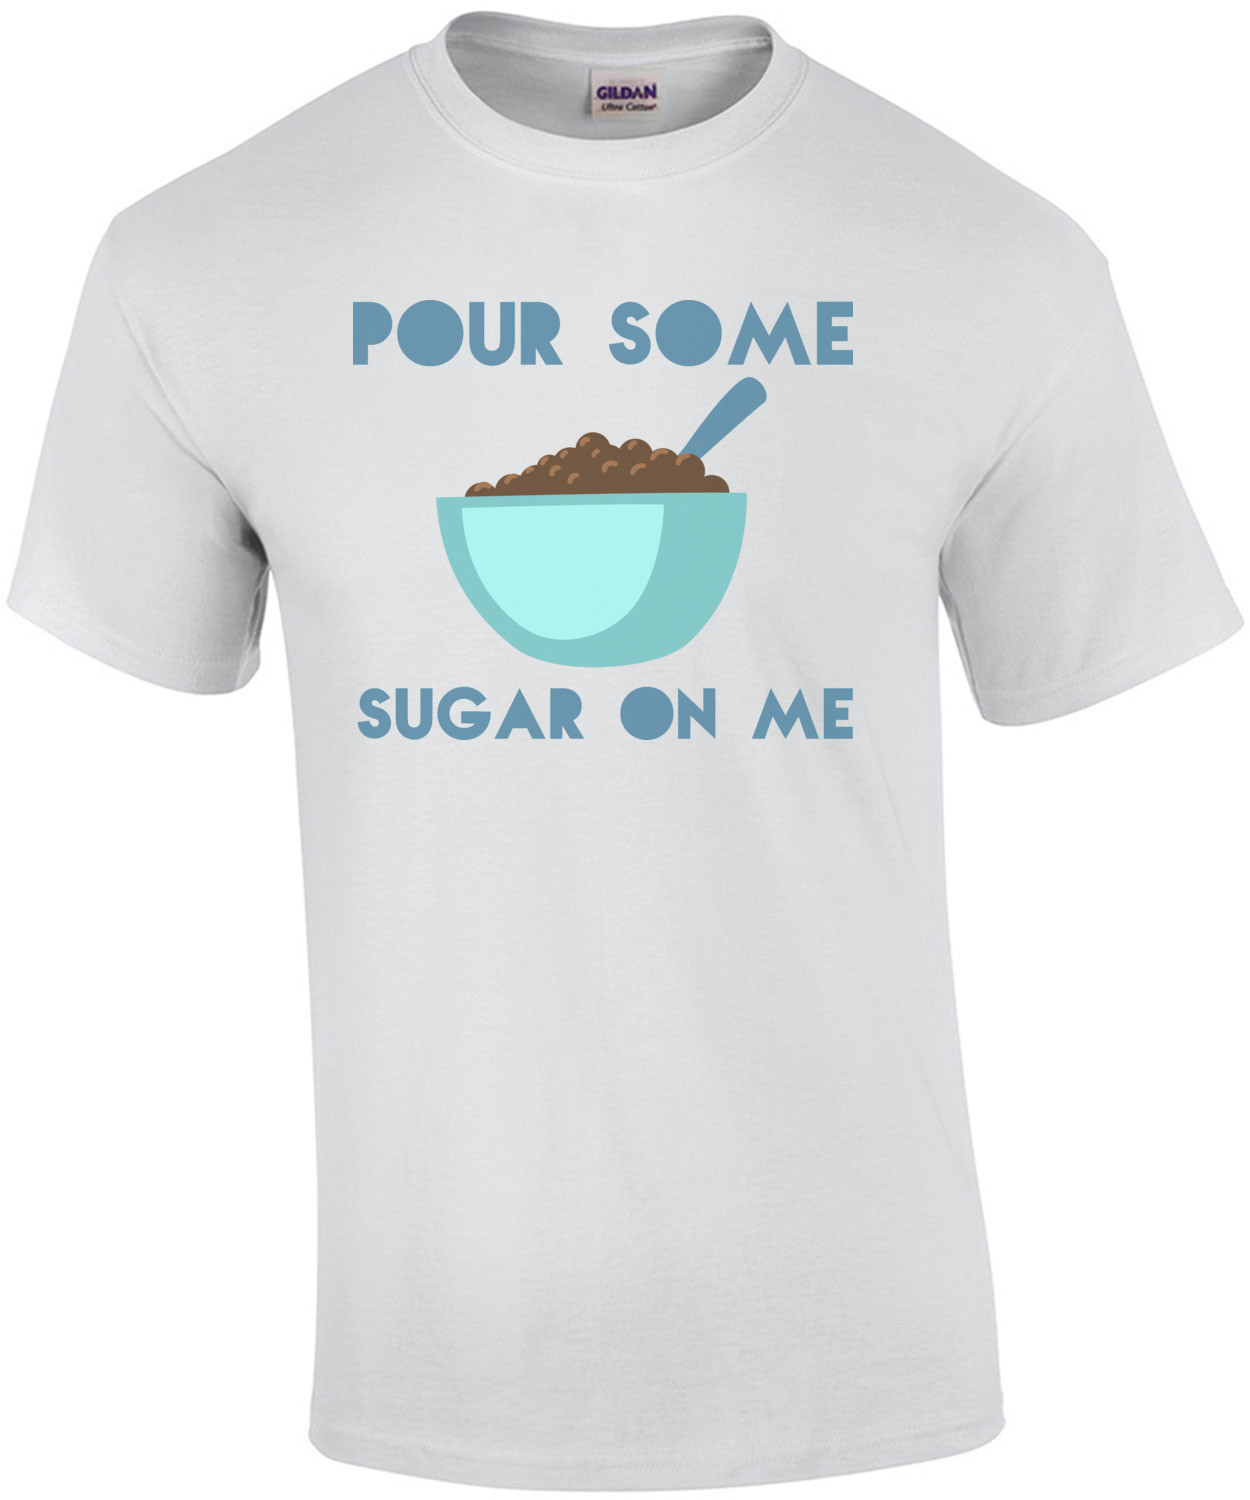 Pour some sugar on me - DEF LEPPARD parody